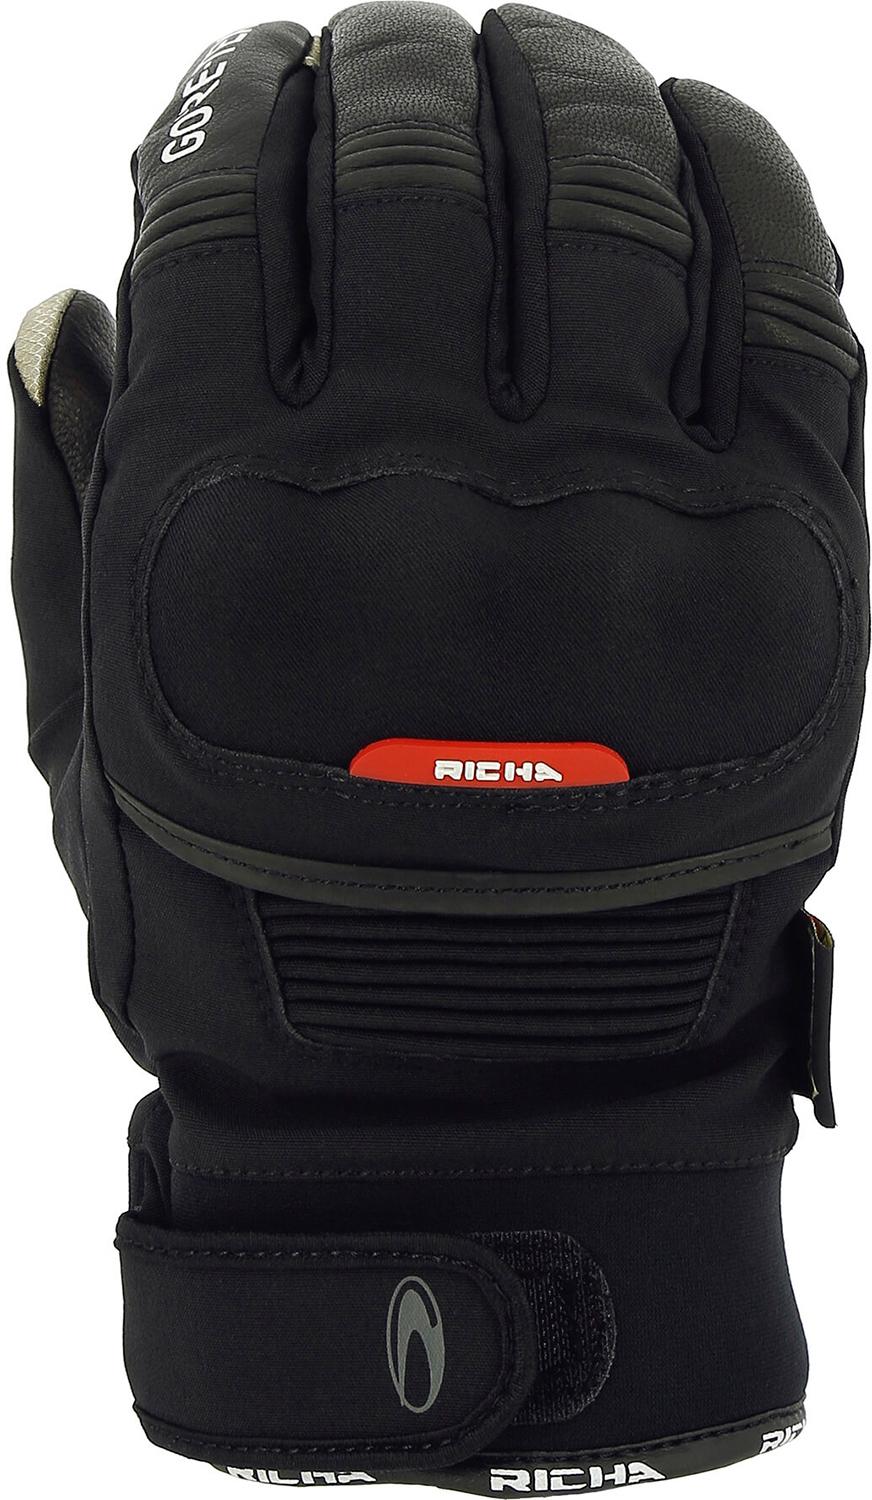 Richa City Gtx Glove Blk S